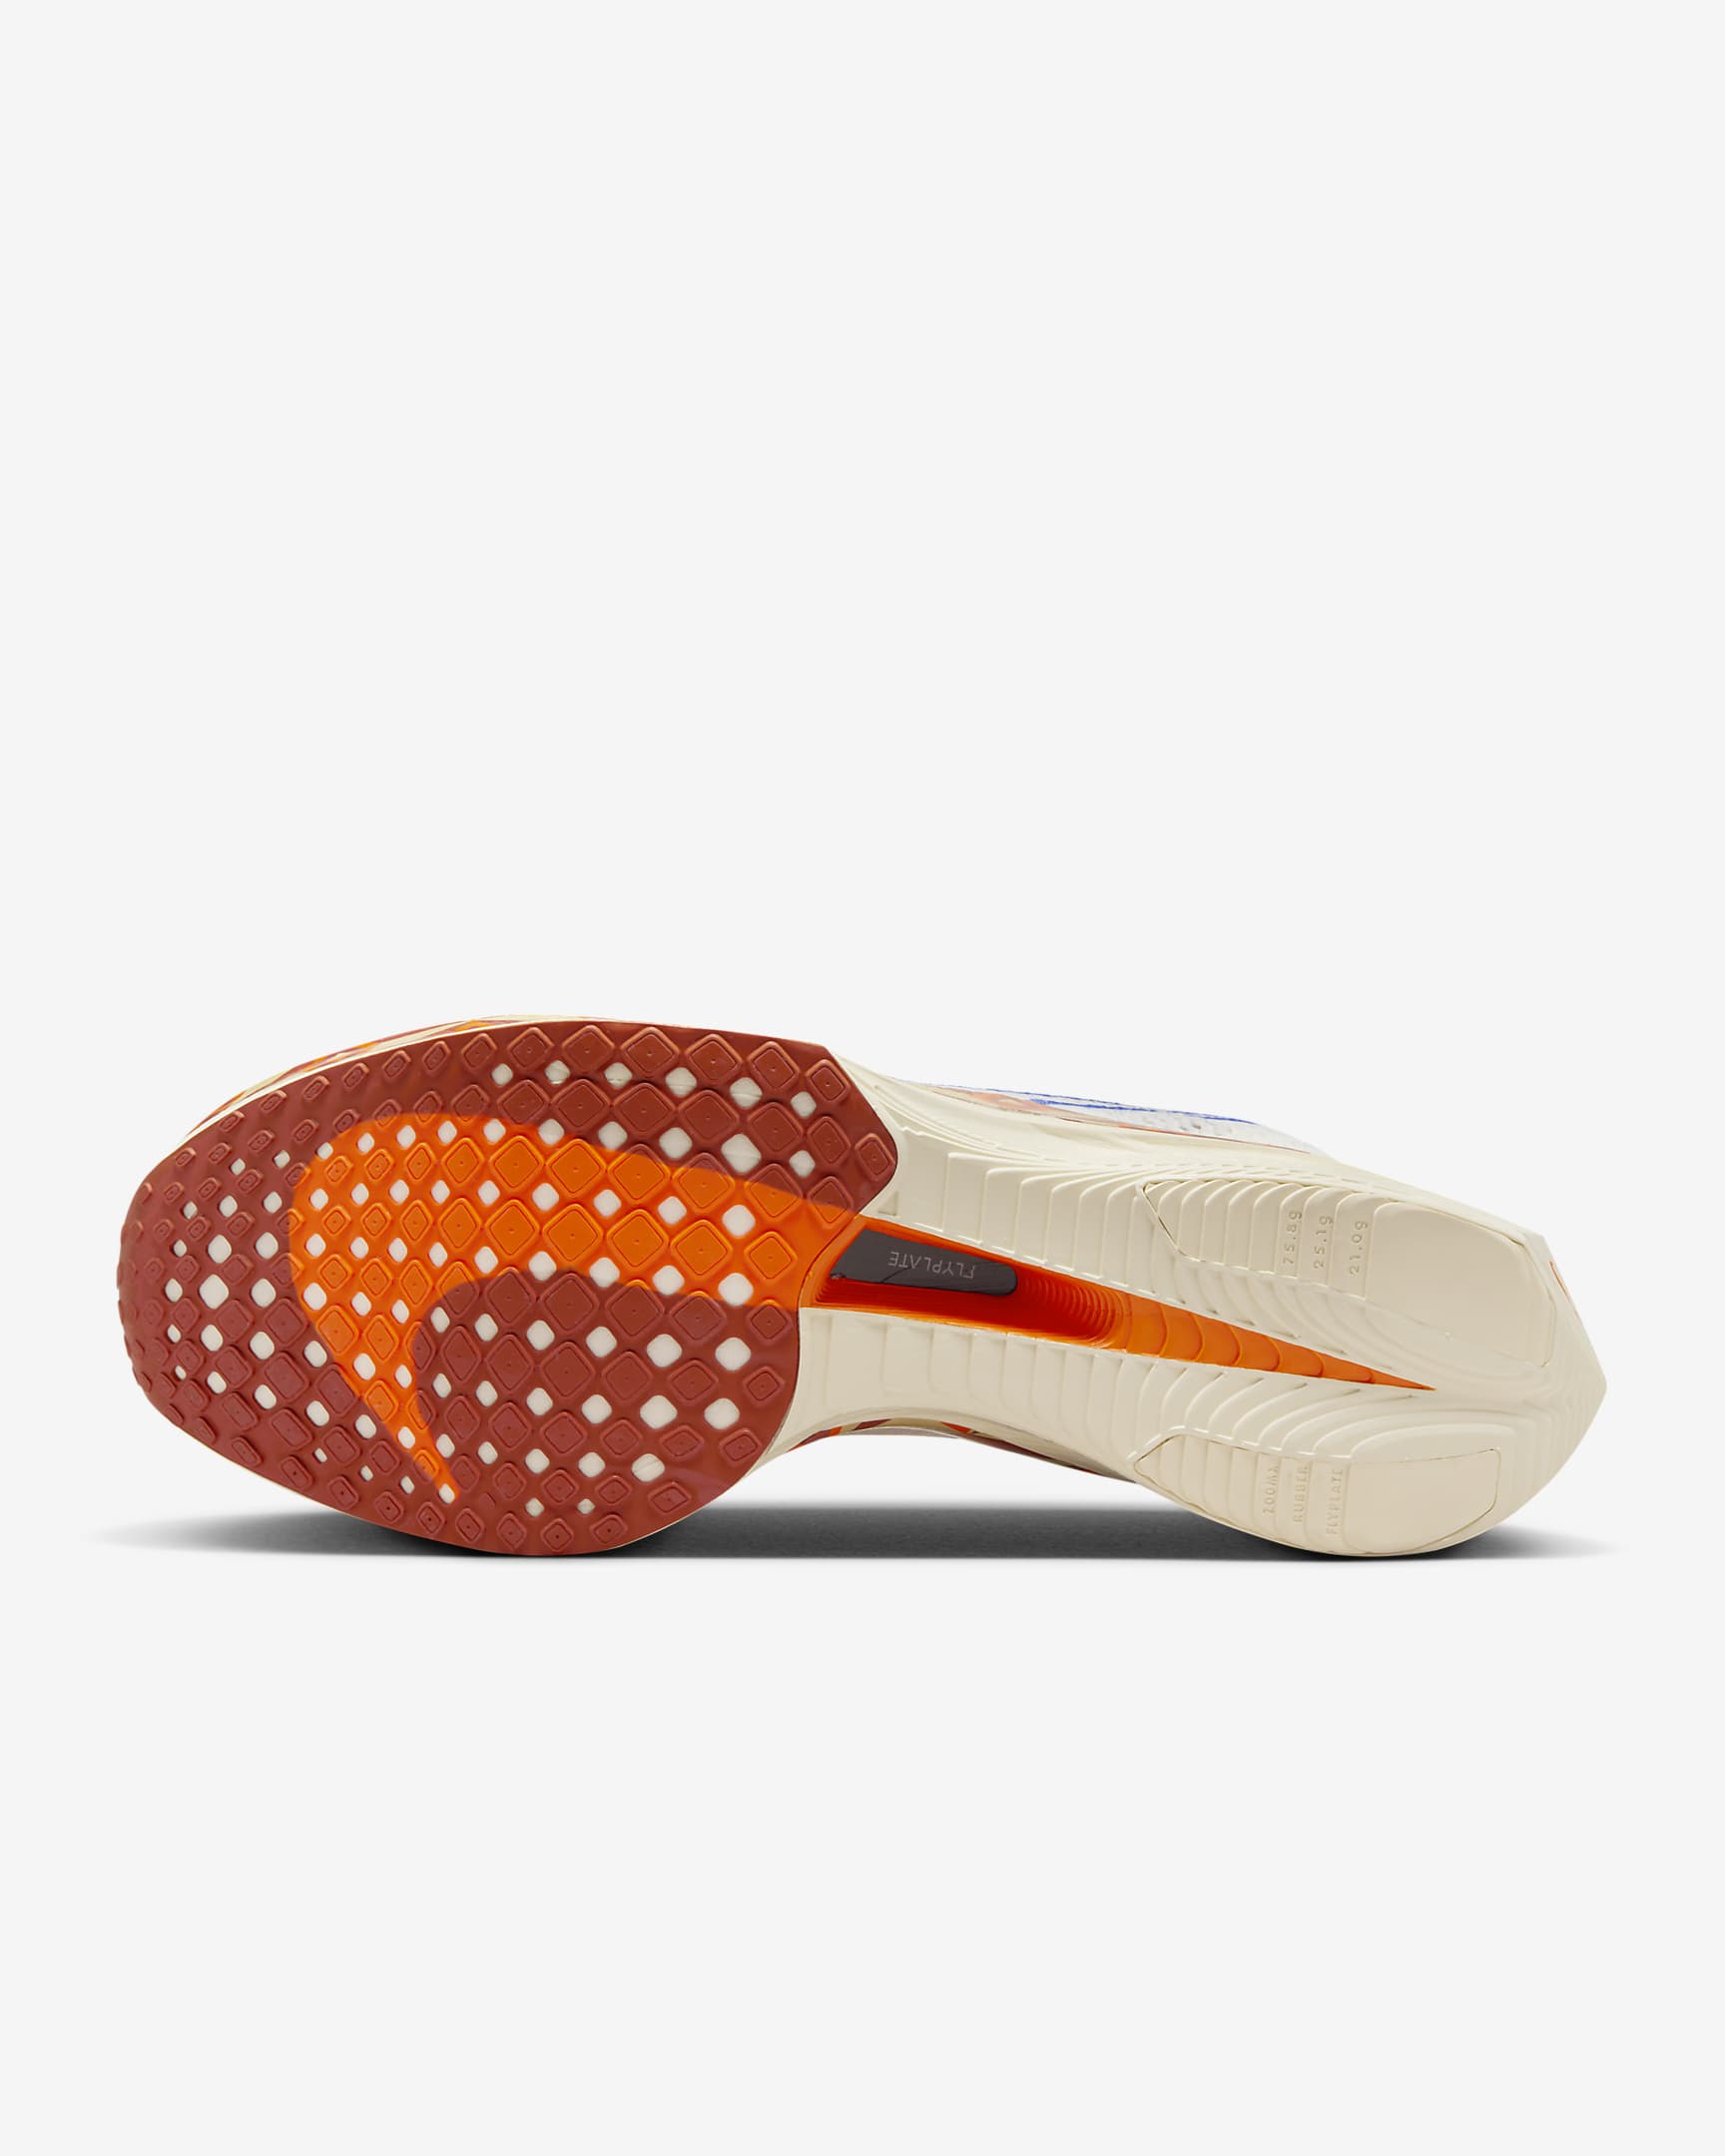 Nike Vaporfly 3 Premium Men's Road Racing Shoes - Sail/Safety Orange/Burnt Sunrise/Hyper Royal